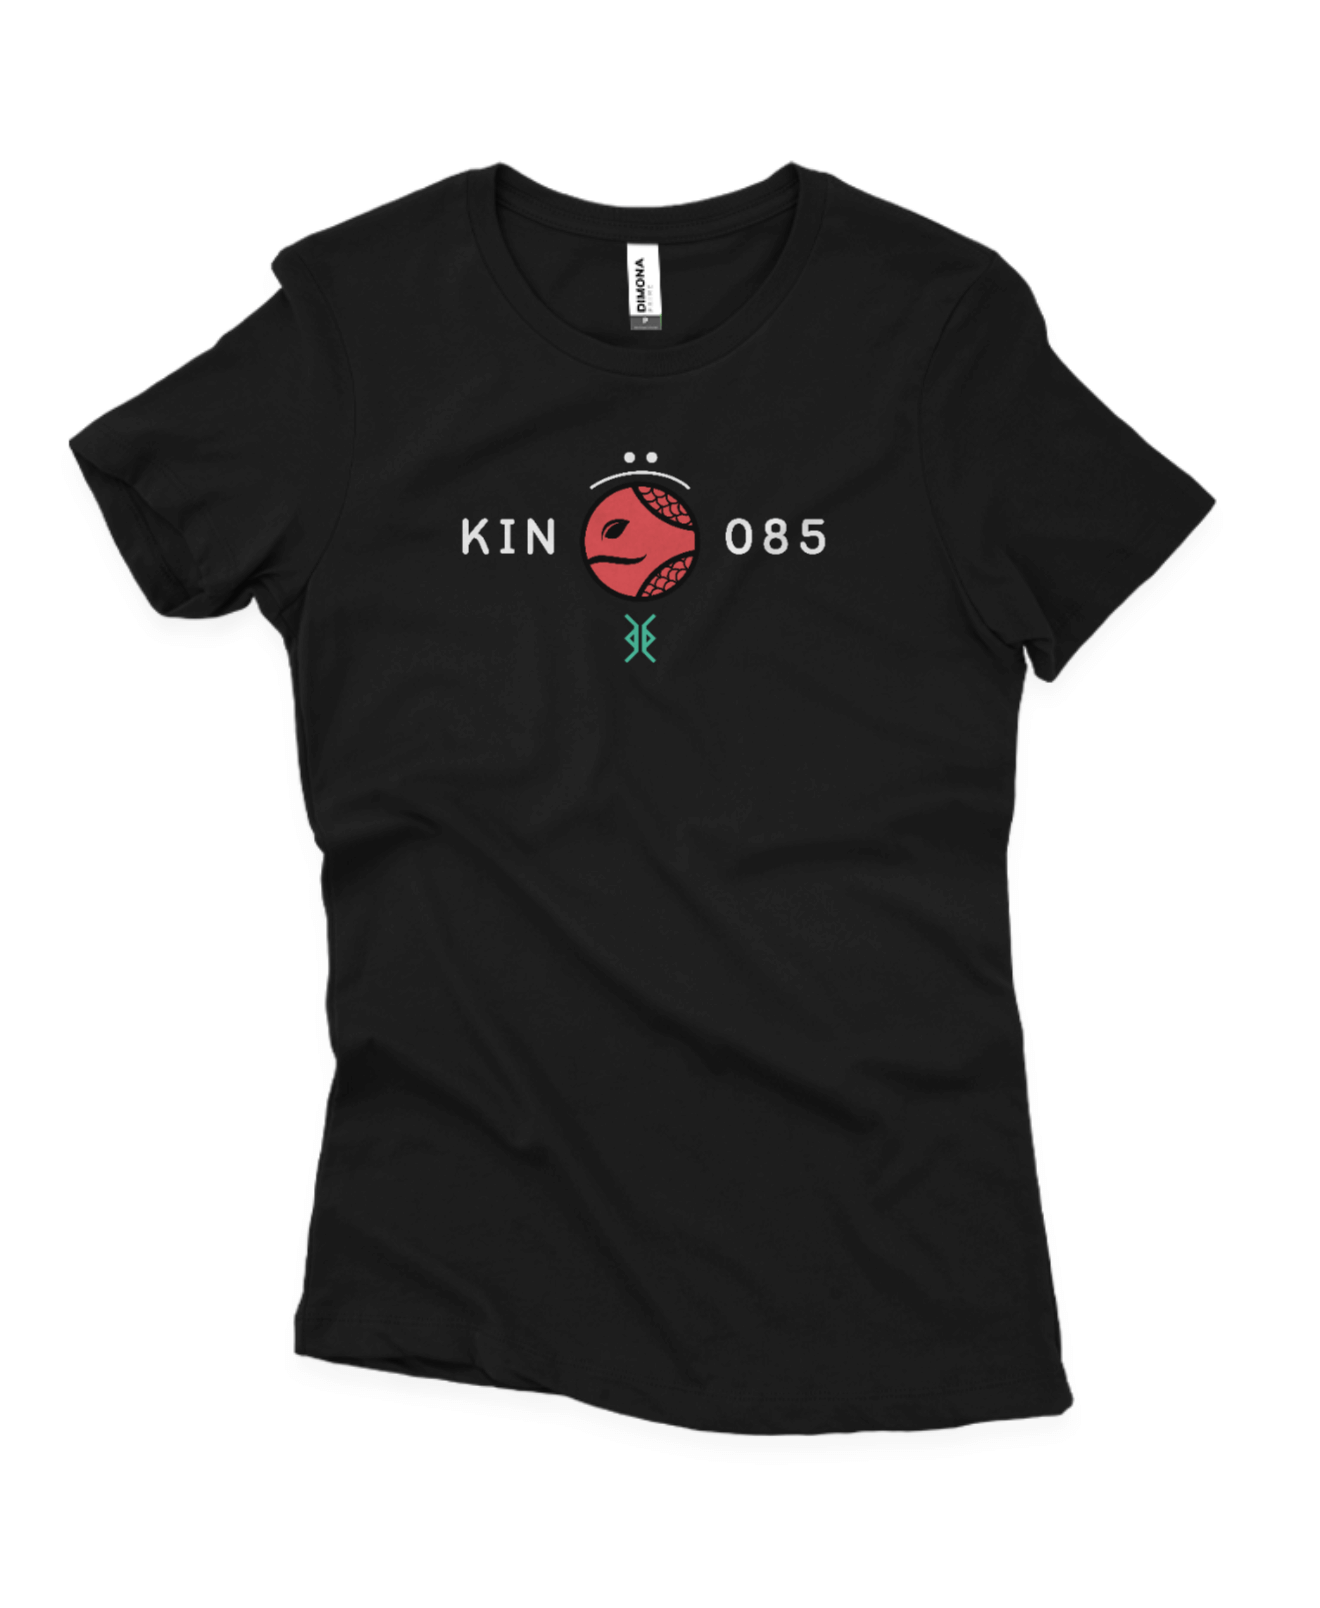 Camisa Feminina Preta Kin 085 - Serpente Ressonante Vermelha - Kin 85